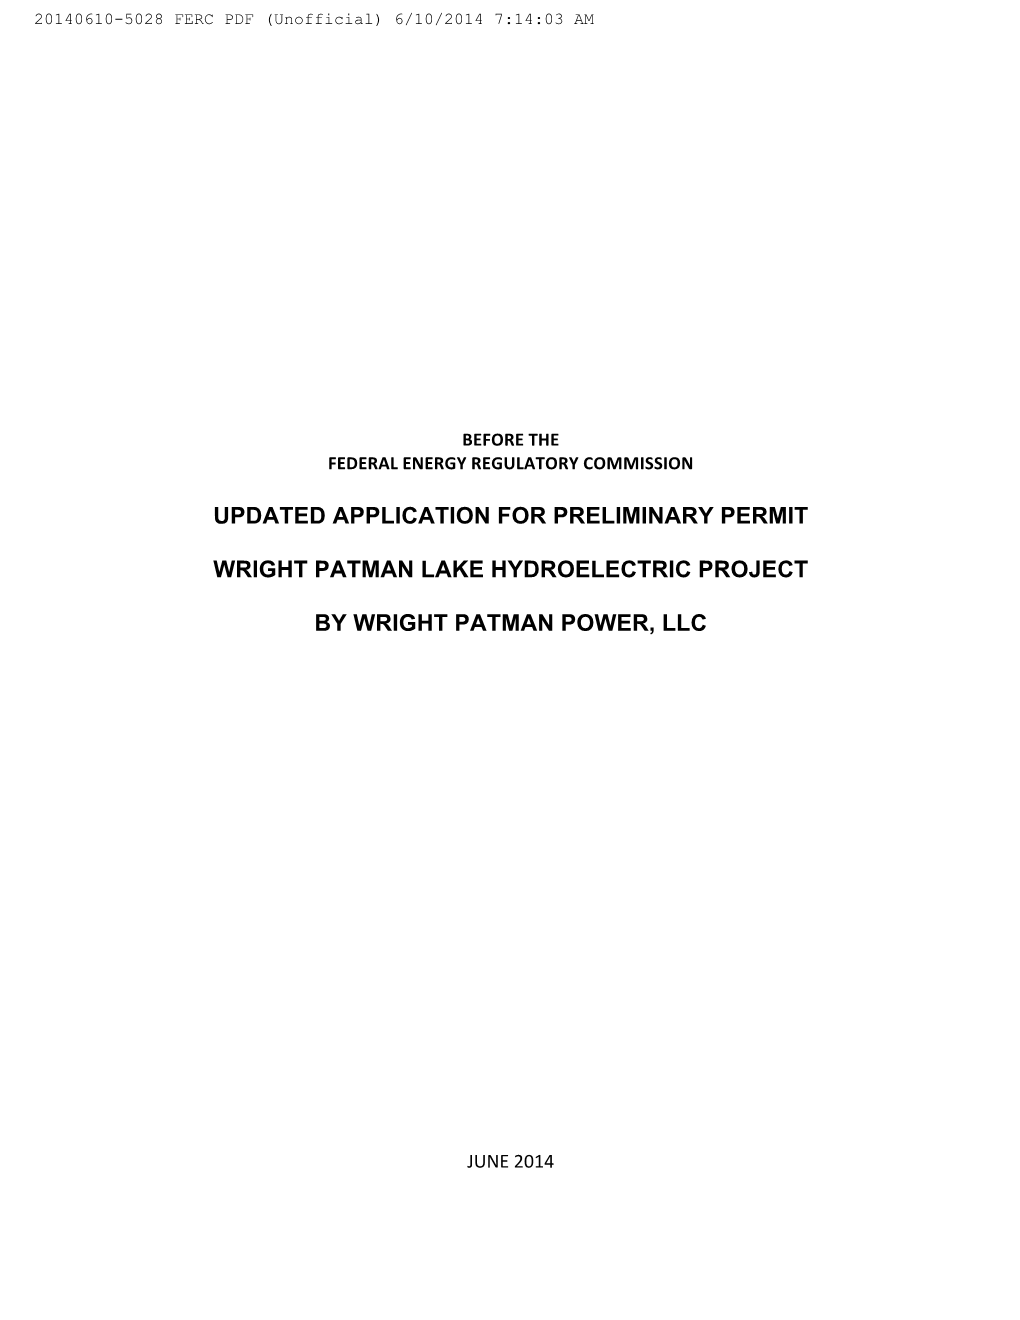 Wright Patman JUN 10 2014 Permit App.Pdf